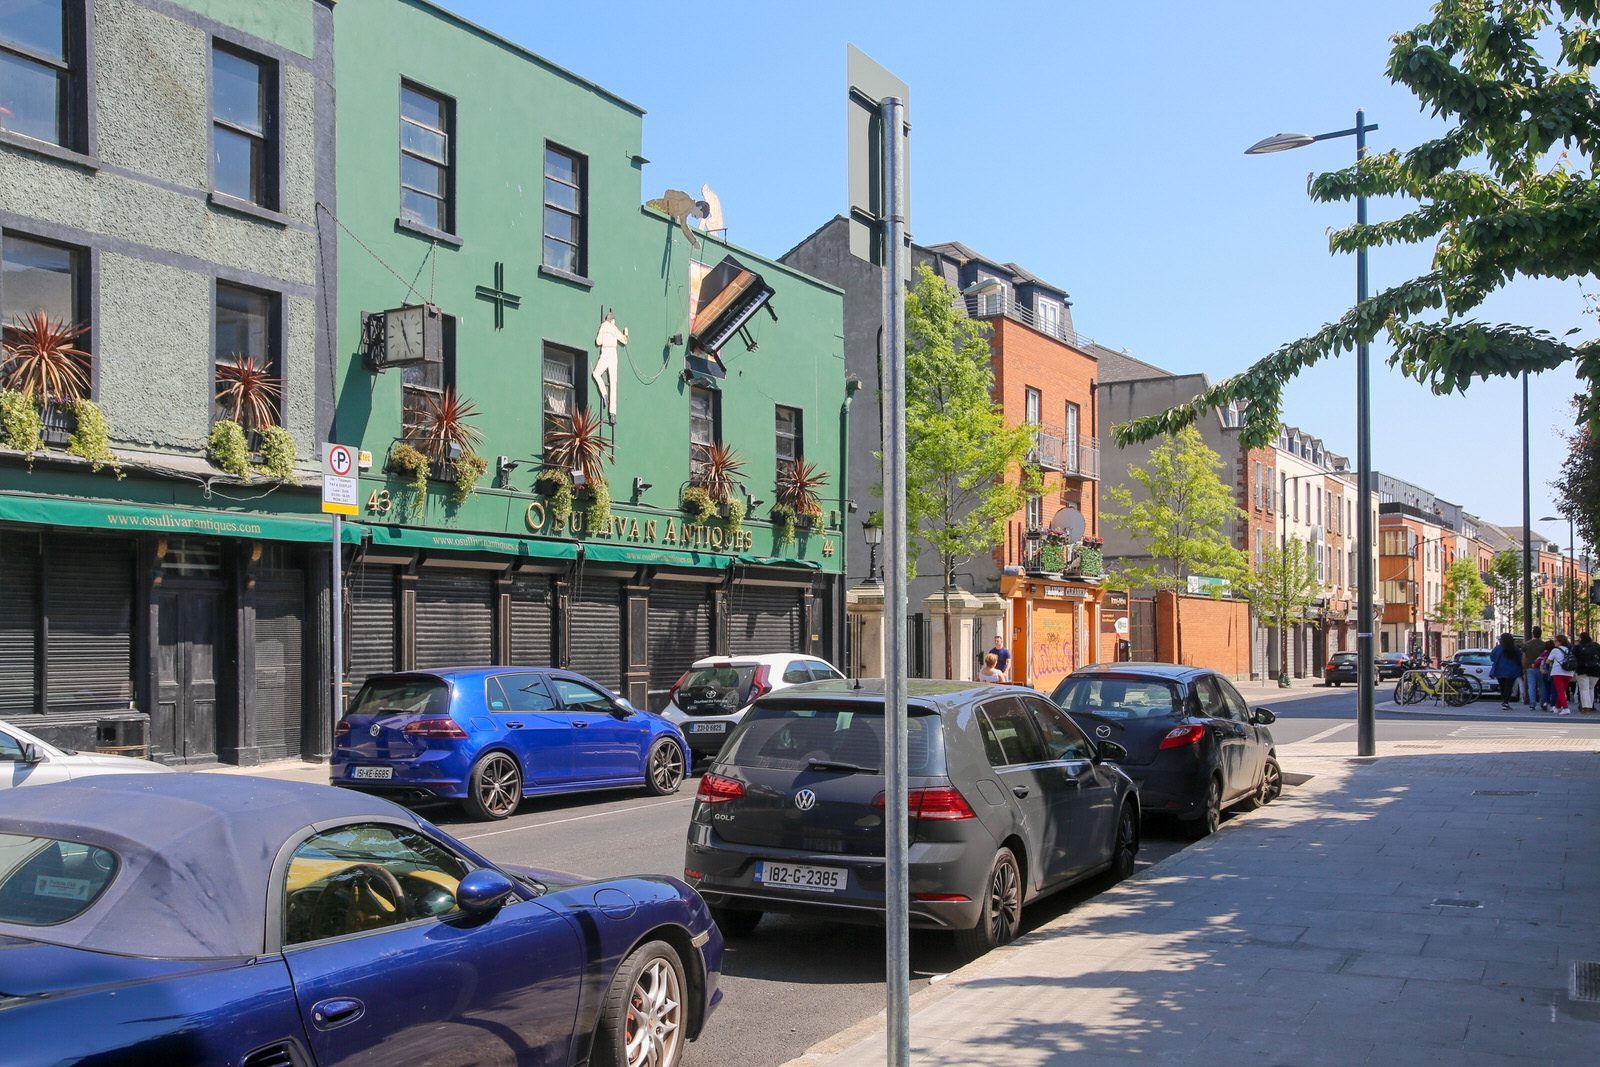 FRANCIS STREET IN DUBLIN [NO LONGER A NEVER ENDING CONSTRUCTION SITE] 013